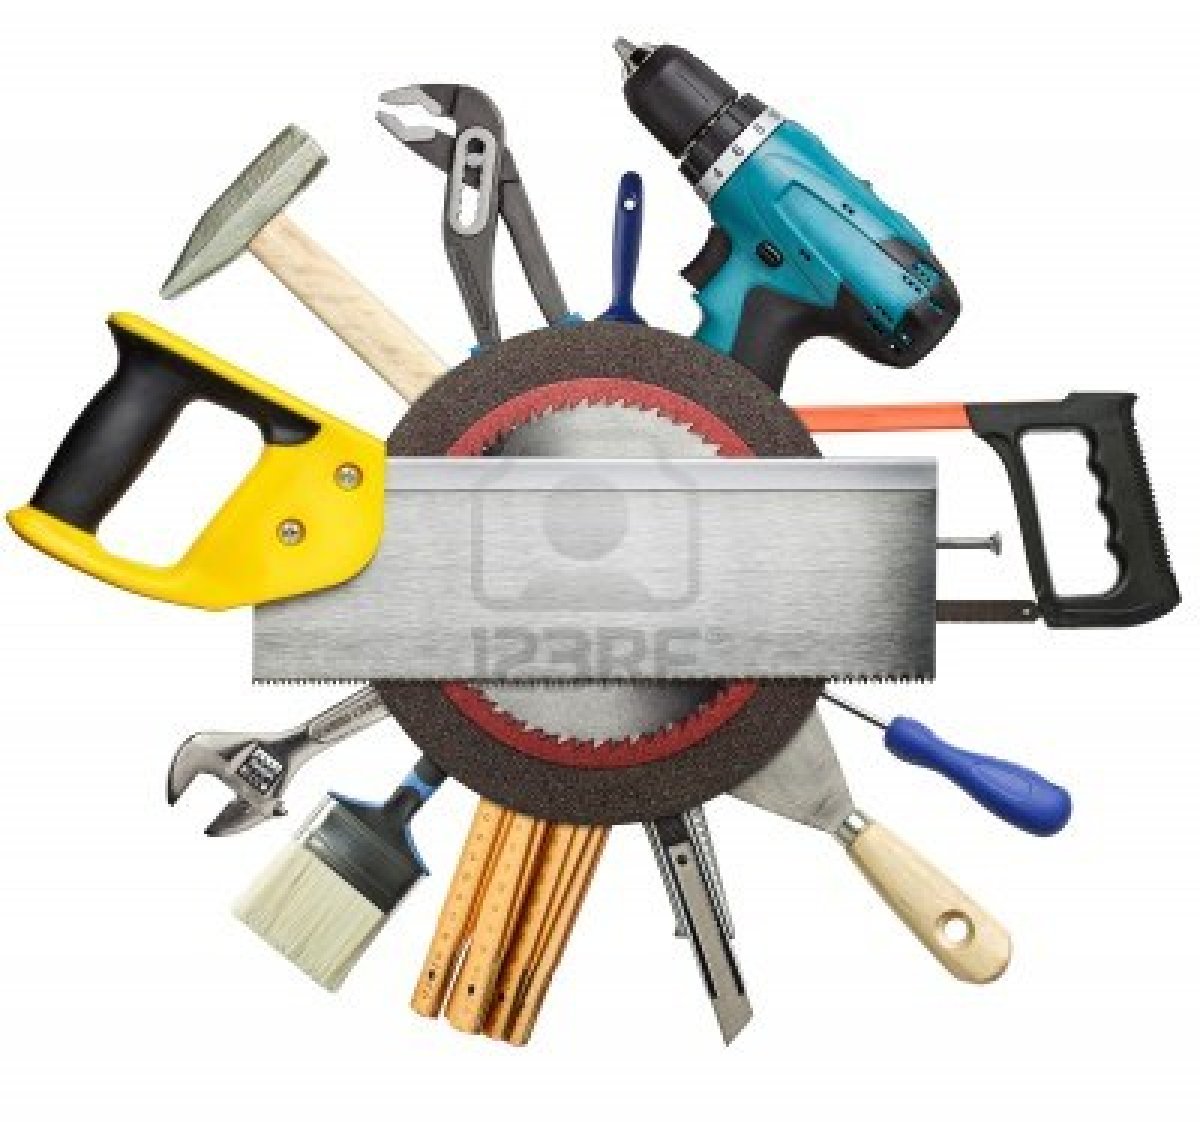 Carpentry Tools - Carpentry Tools Basic Information